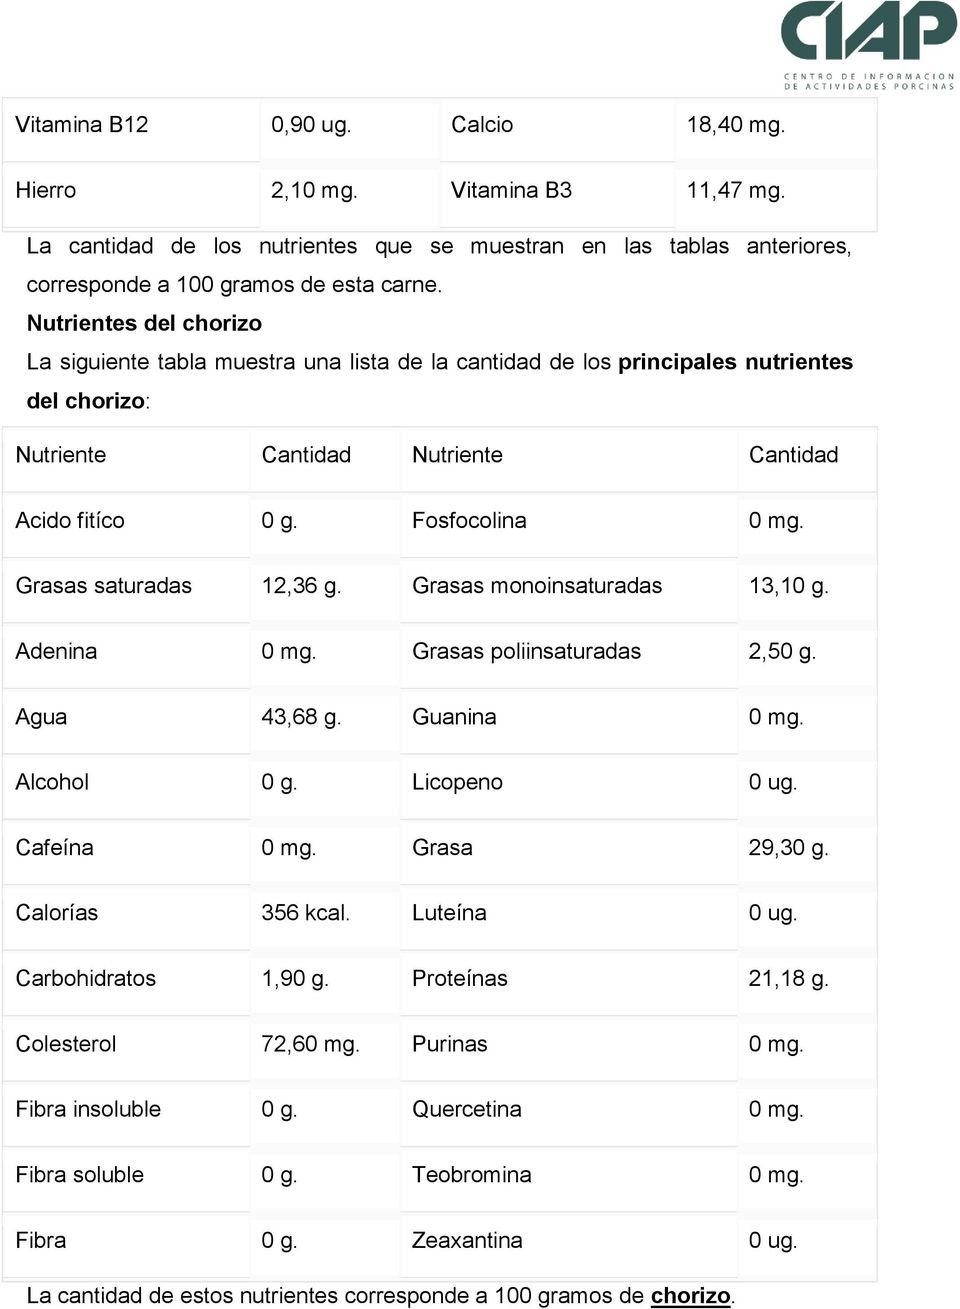 Grasas monoinsaturadas 13,10 g. Adenina 0 mg. Grasas poliinsaturadas 2,50 g. Agua 43,68 g. Guanina 0 mg. Alcohol 0 g. Licopeno 0 ug. Cafeína 0 mg. Grasa 29,30 g. Calorías 356 kcal. Luteína 0 ug.